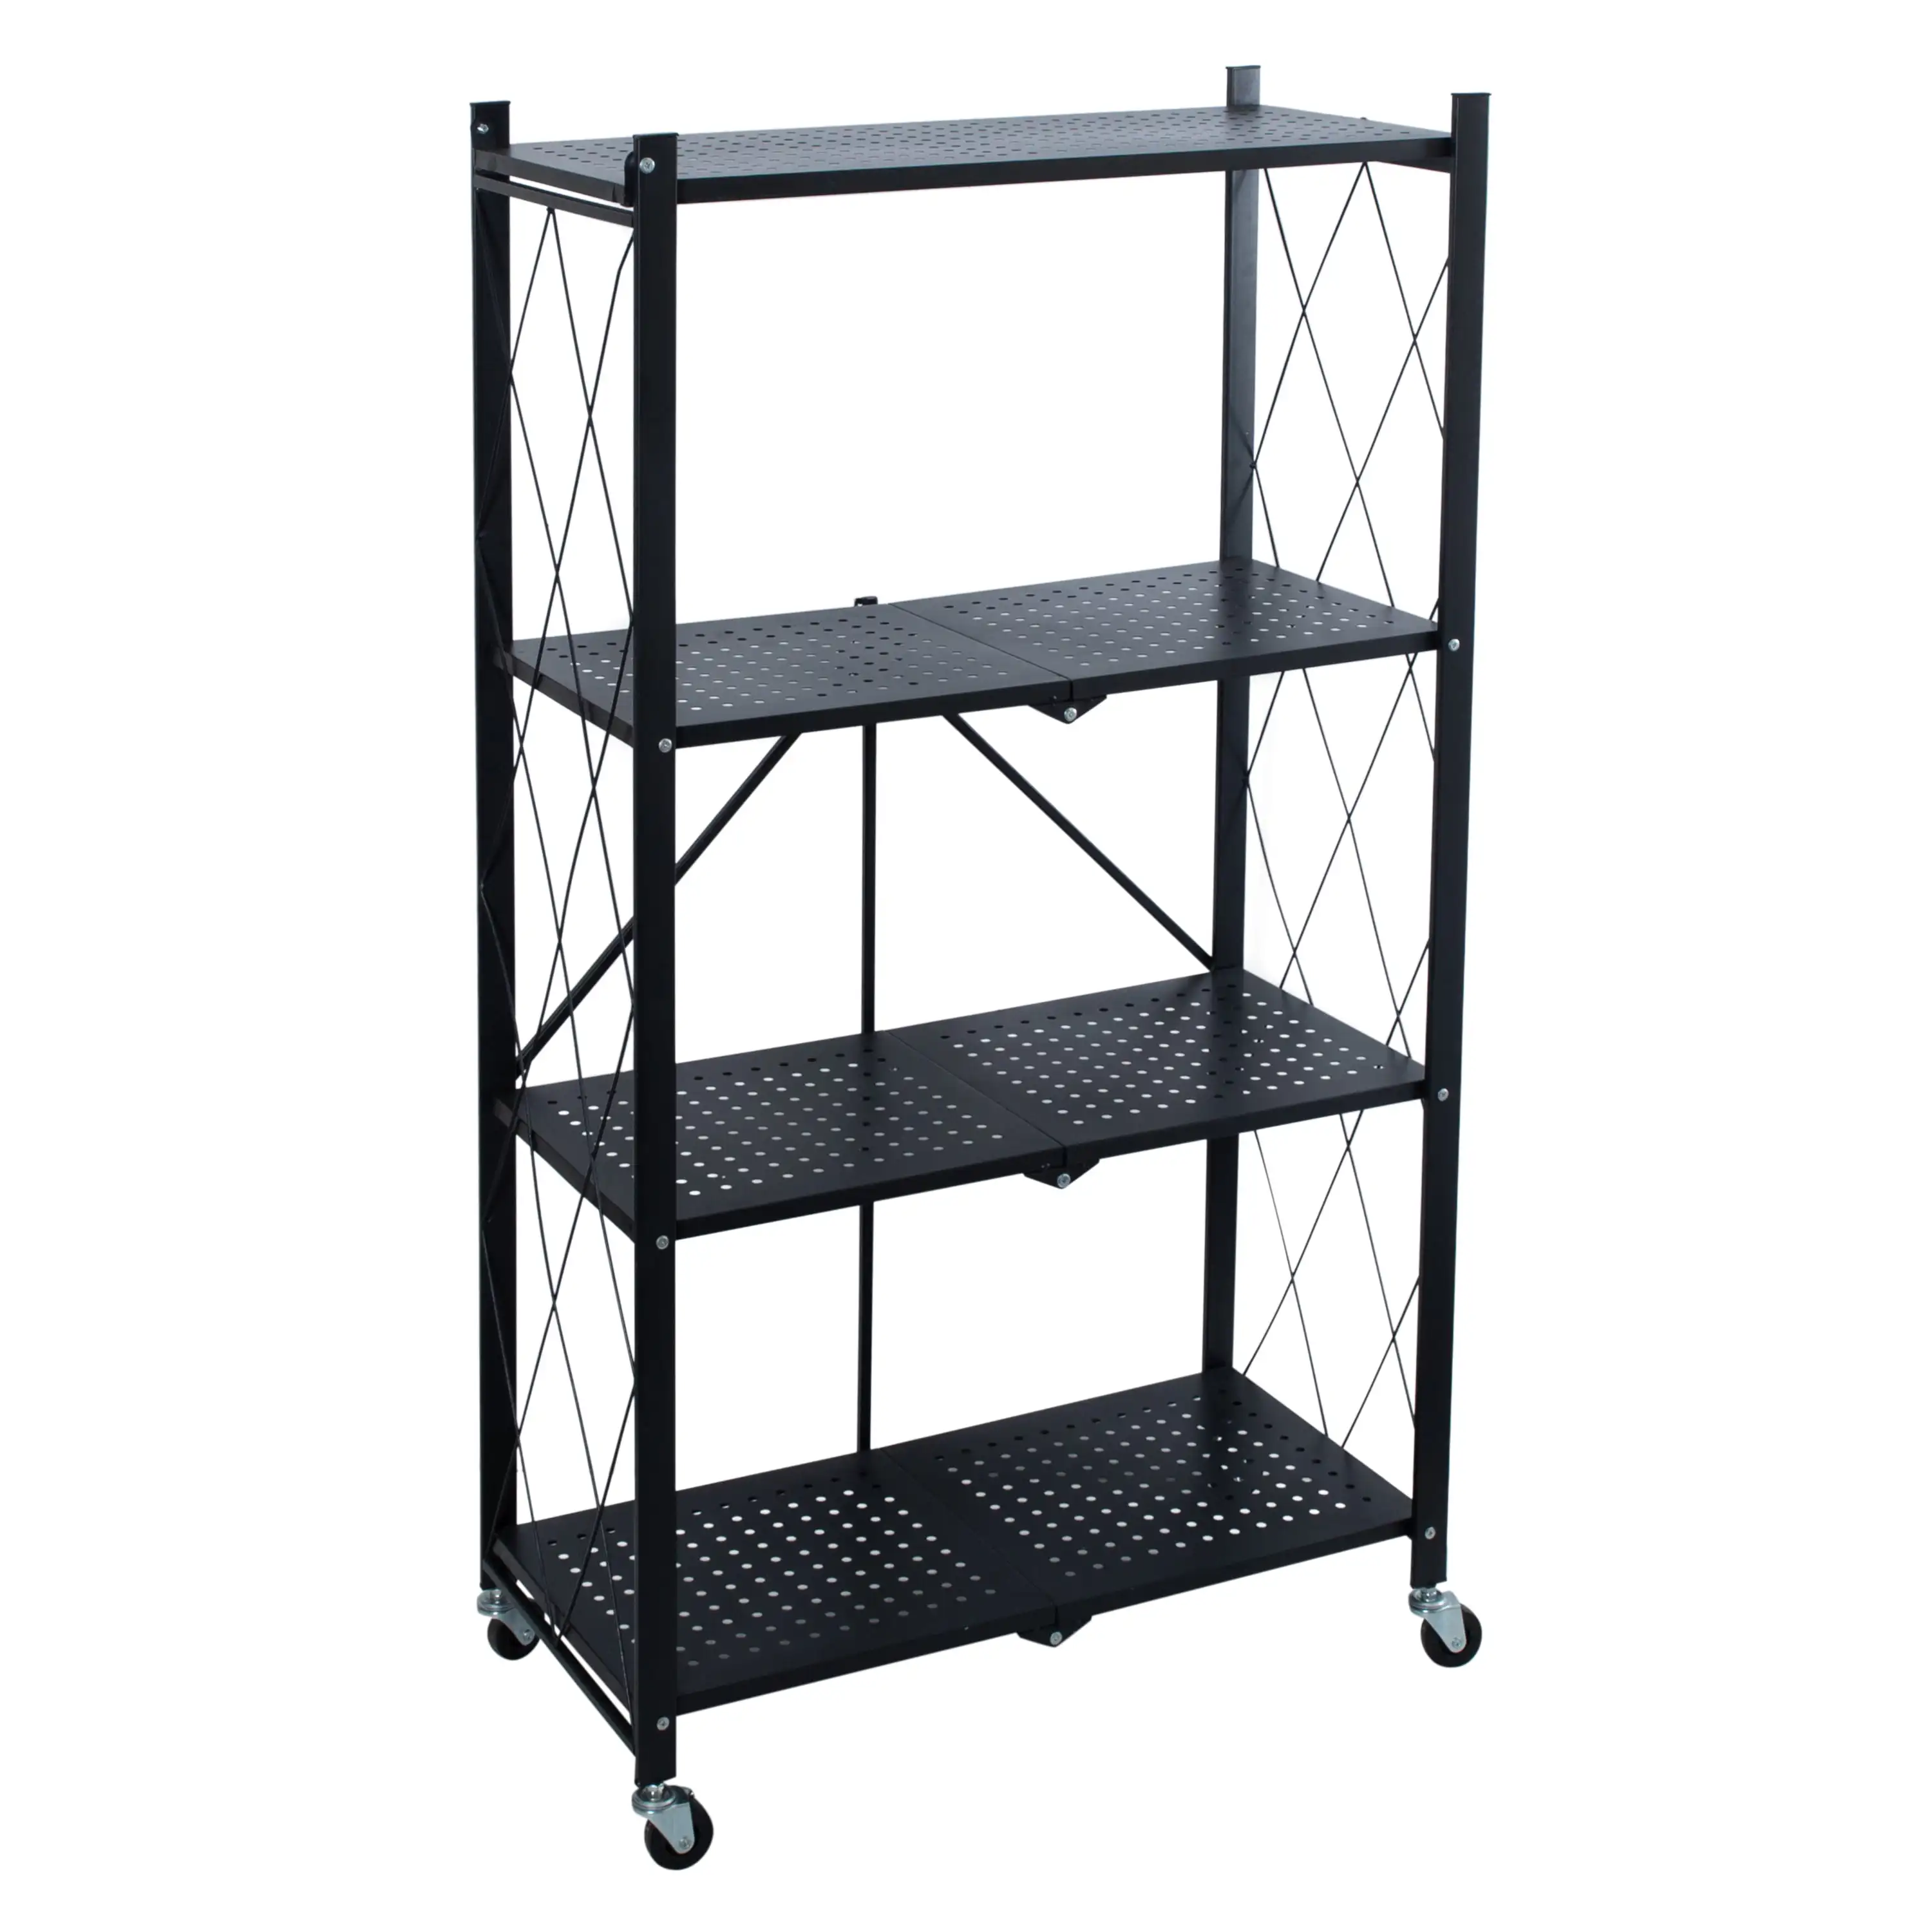 

Organize It All 4 Shelf Foldable Metal Storage Shelves, Wheels, Adult, Kitchen, Laundry Room, Black